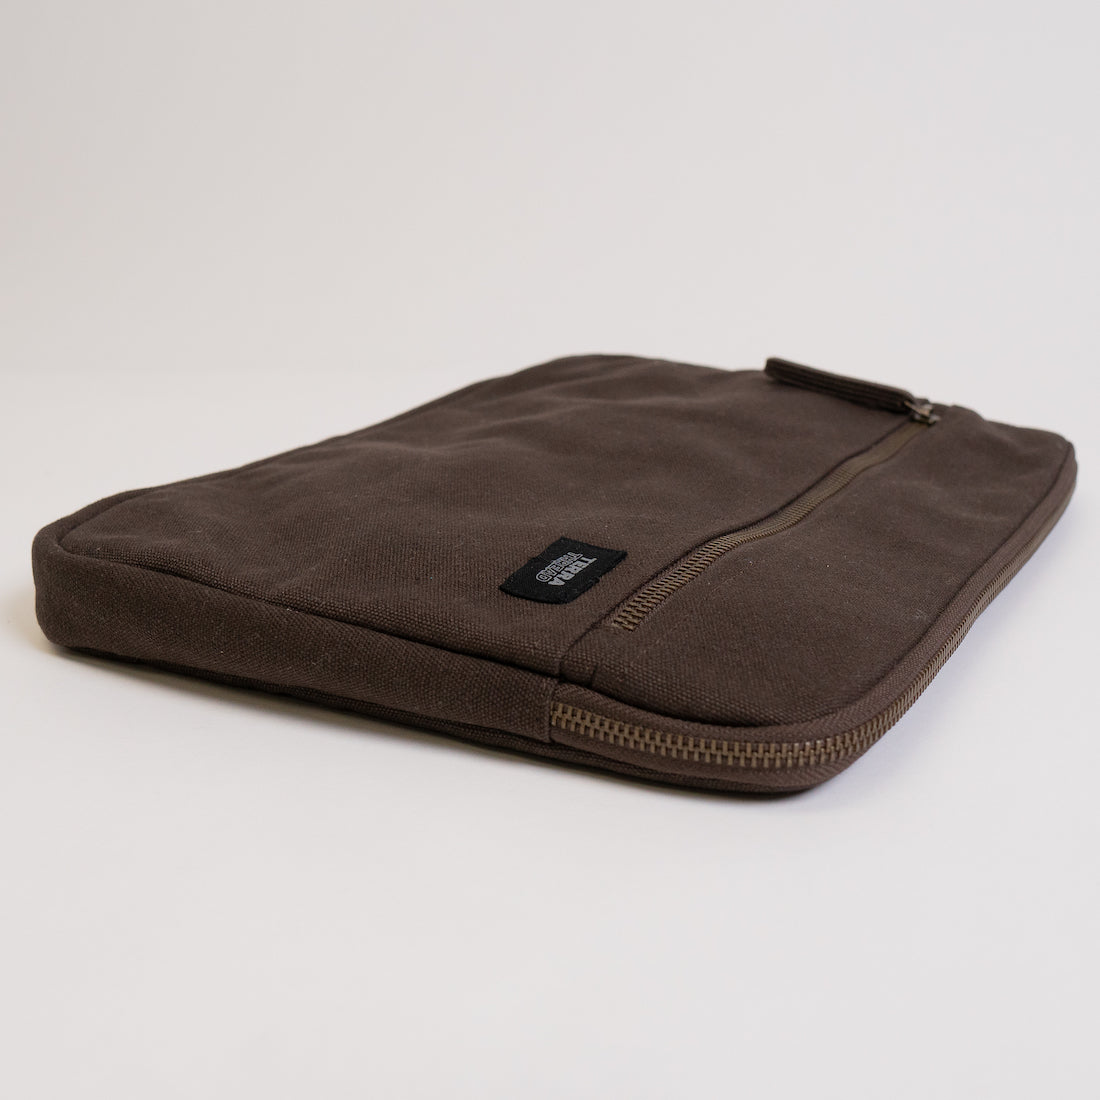 matig condoom desinfecteren 13 inch Laptop Sleeve | 13 Inch Laptop case | Laptop bag – Terra Thread